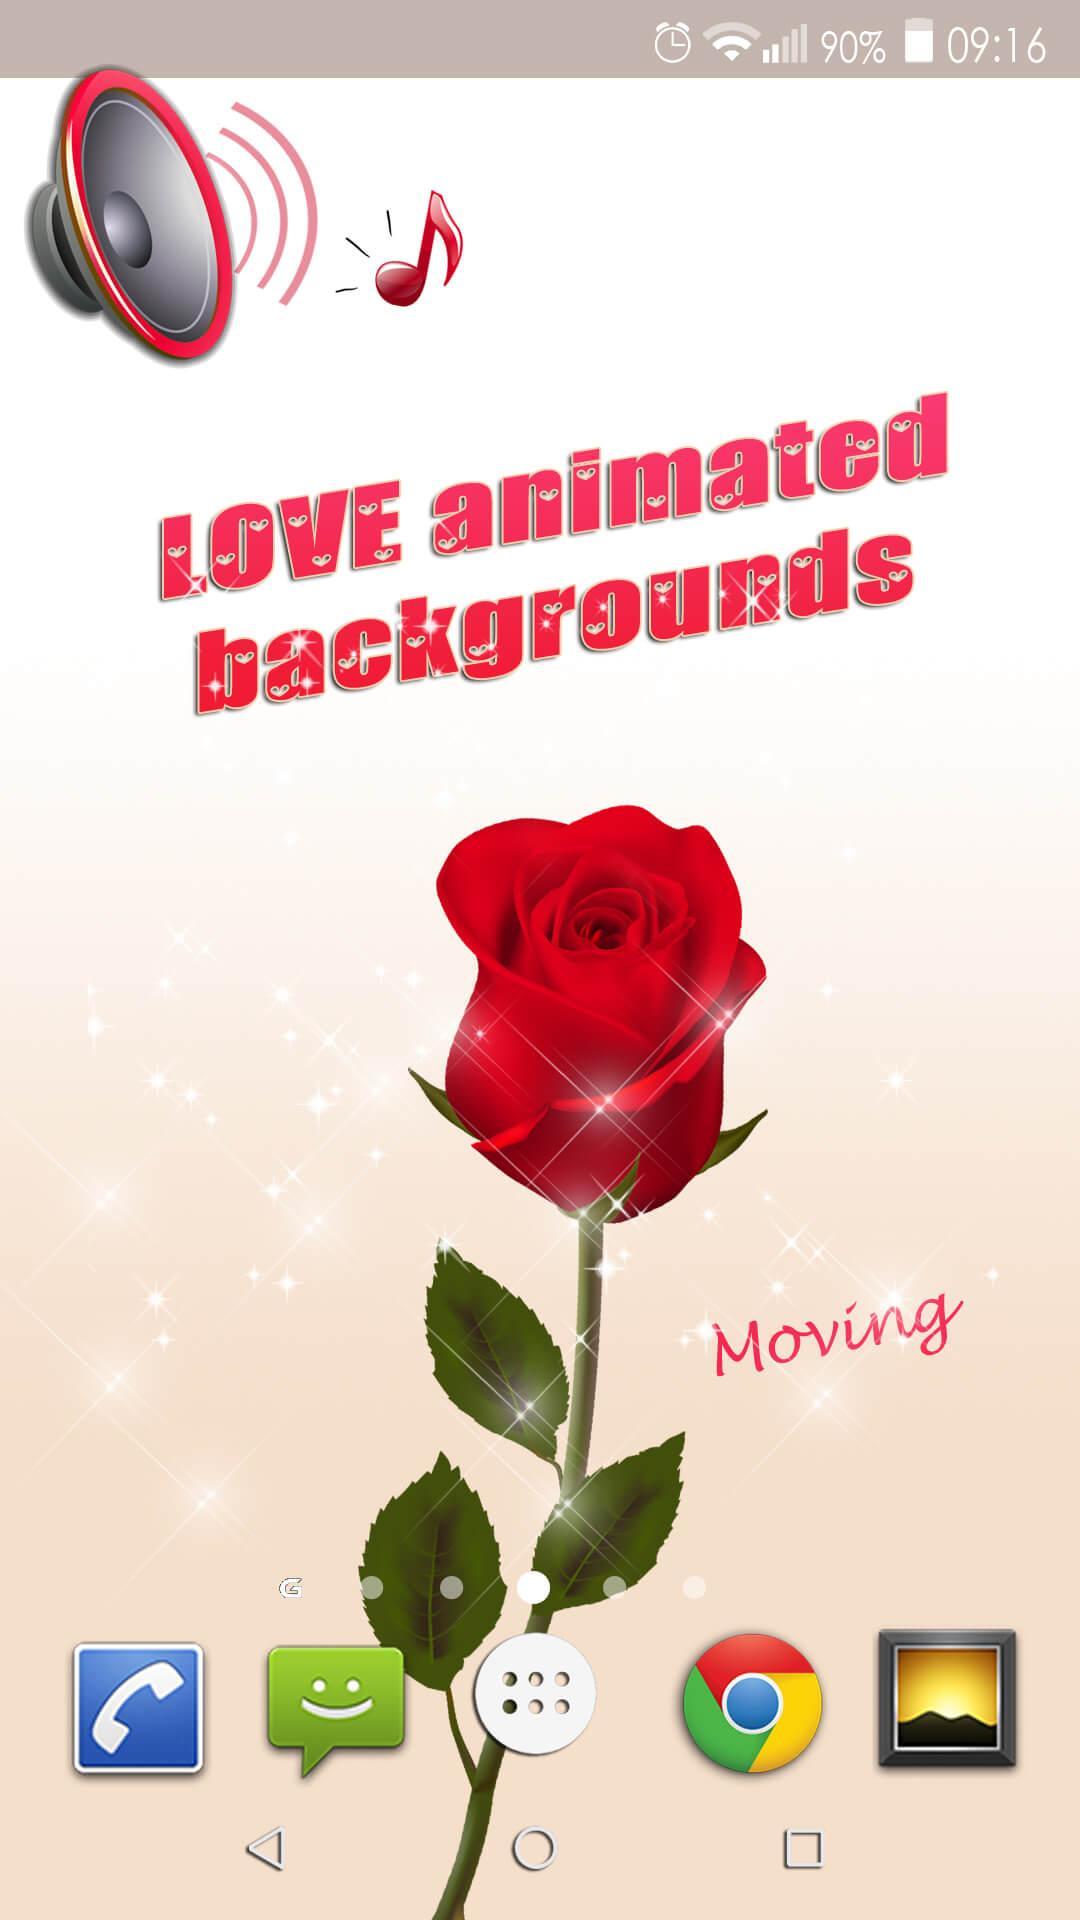 Gif Cinta Xd83dxdc95 Wallpaper Romantis Hidup For Android Apk Download